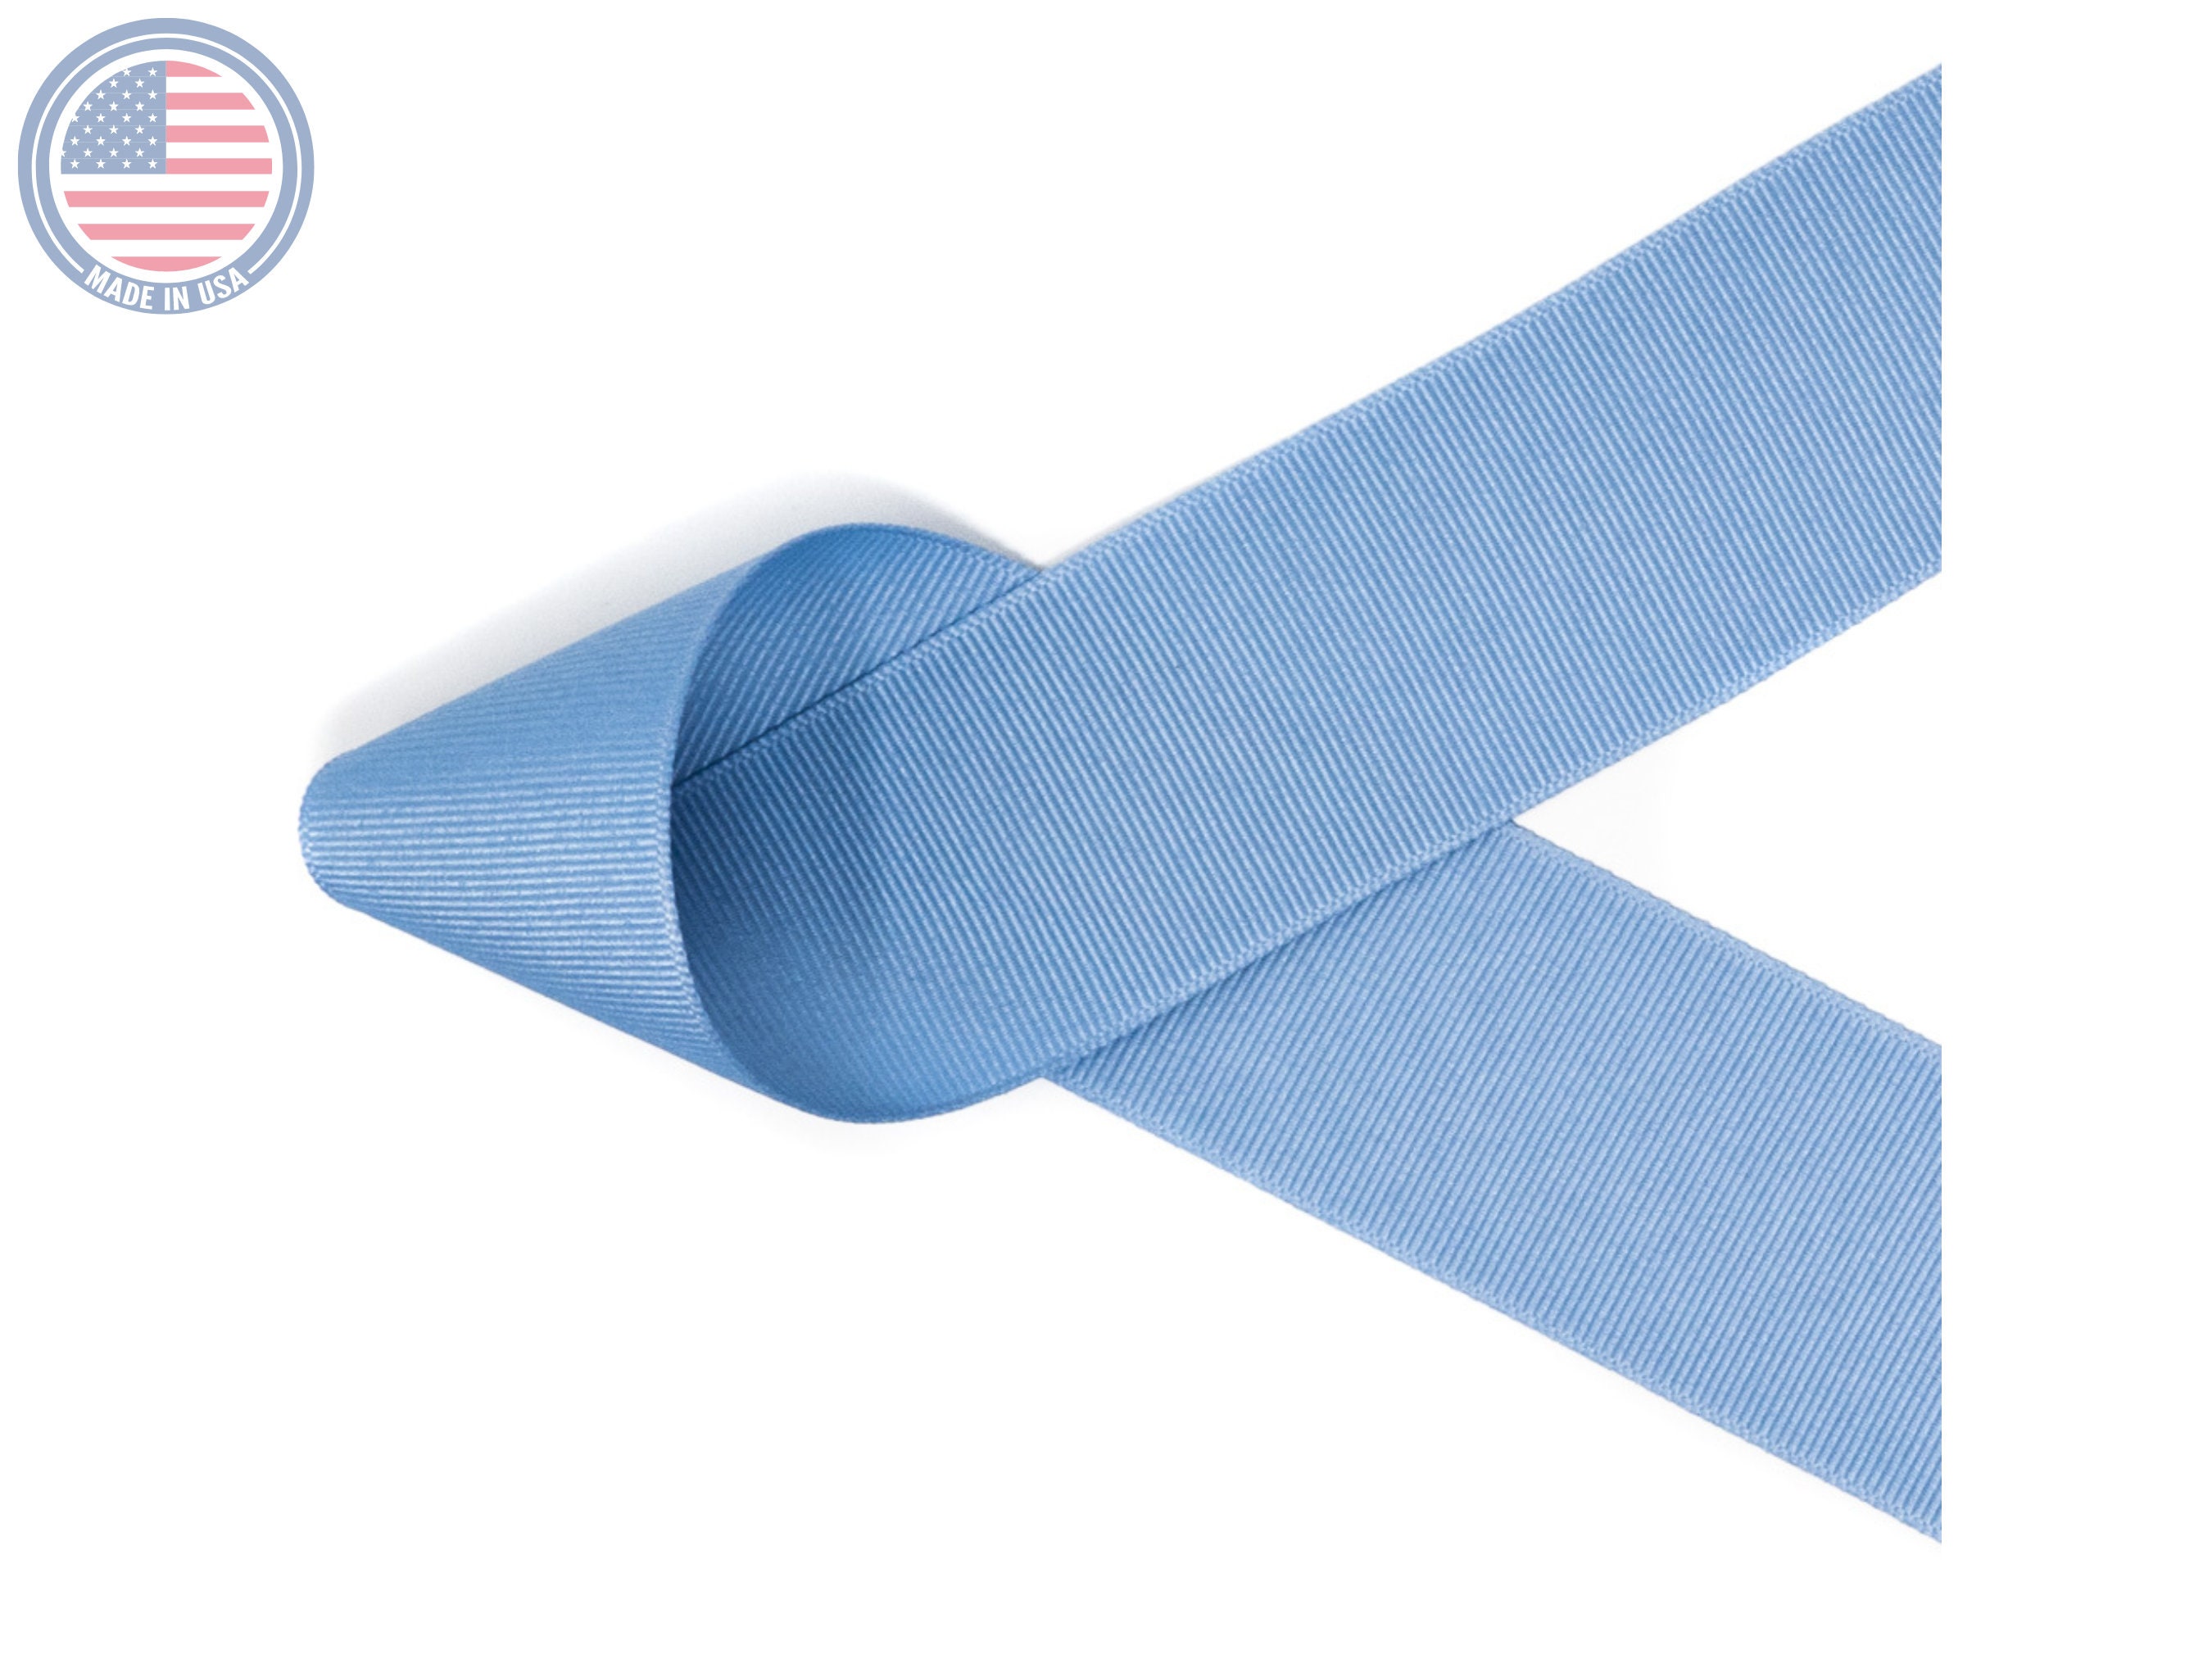 Offray Grosgrain Ribbon - 1 Inch Wide, 1.8 Yards Color: Bluebird